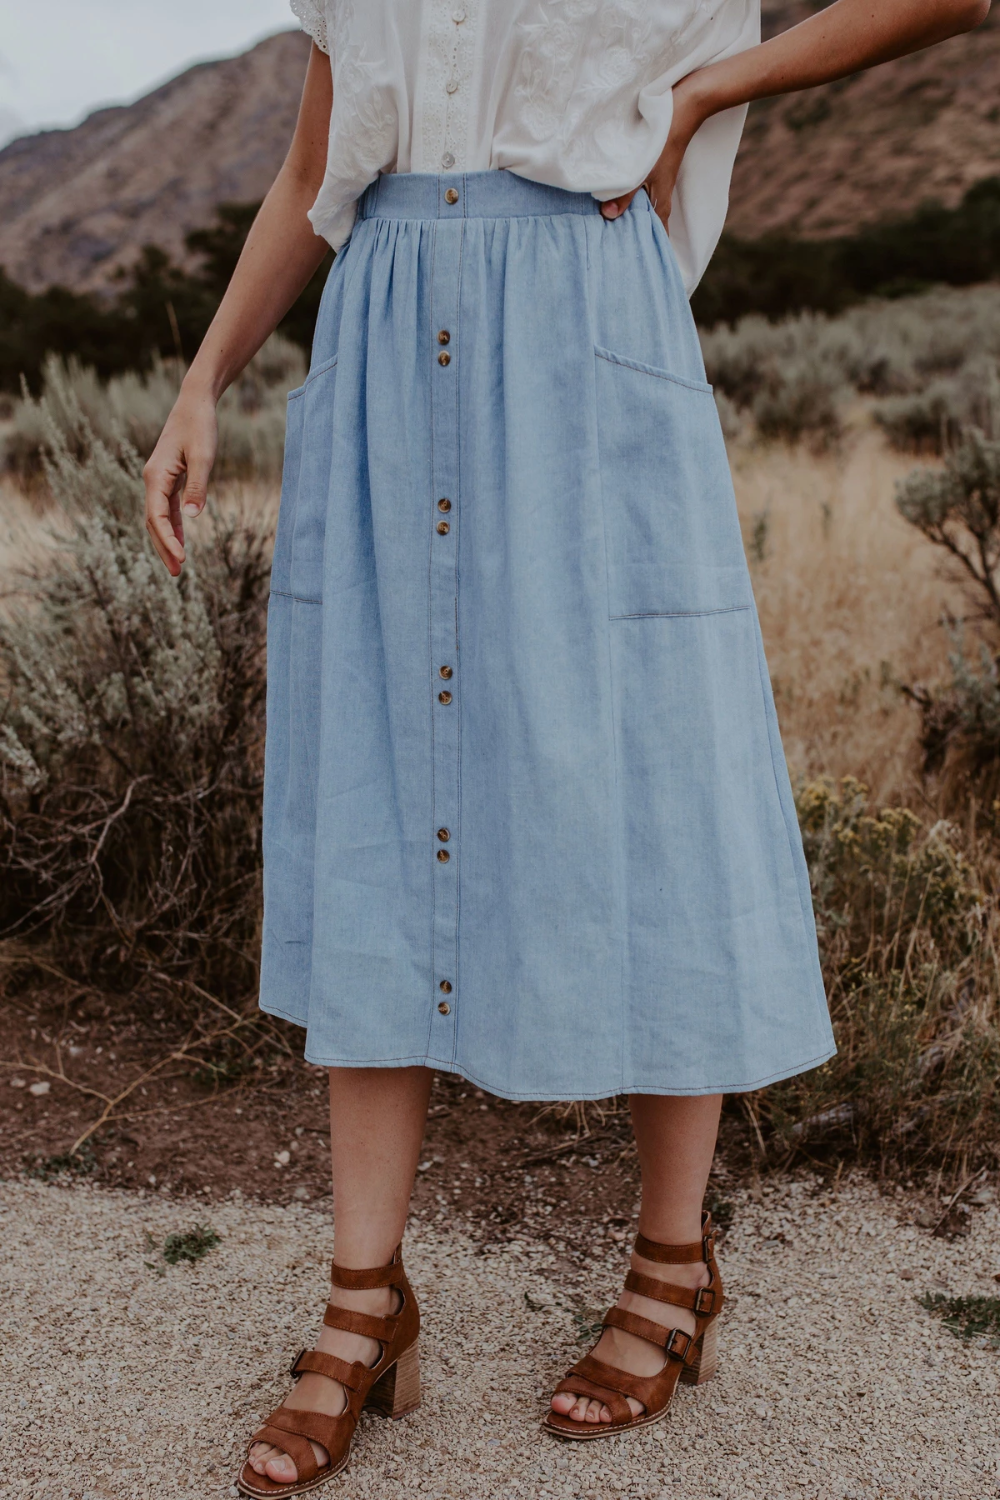 True Blue Denim Skirt - 2 Colors -   17 denim dress Outfits ideas